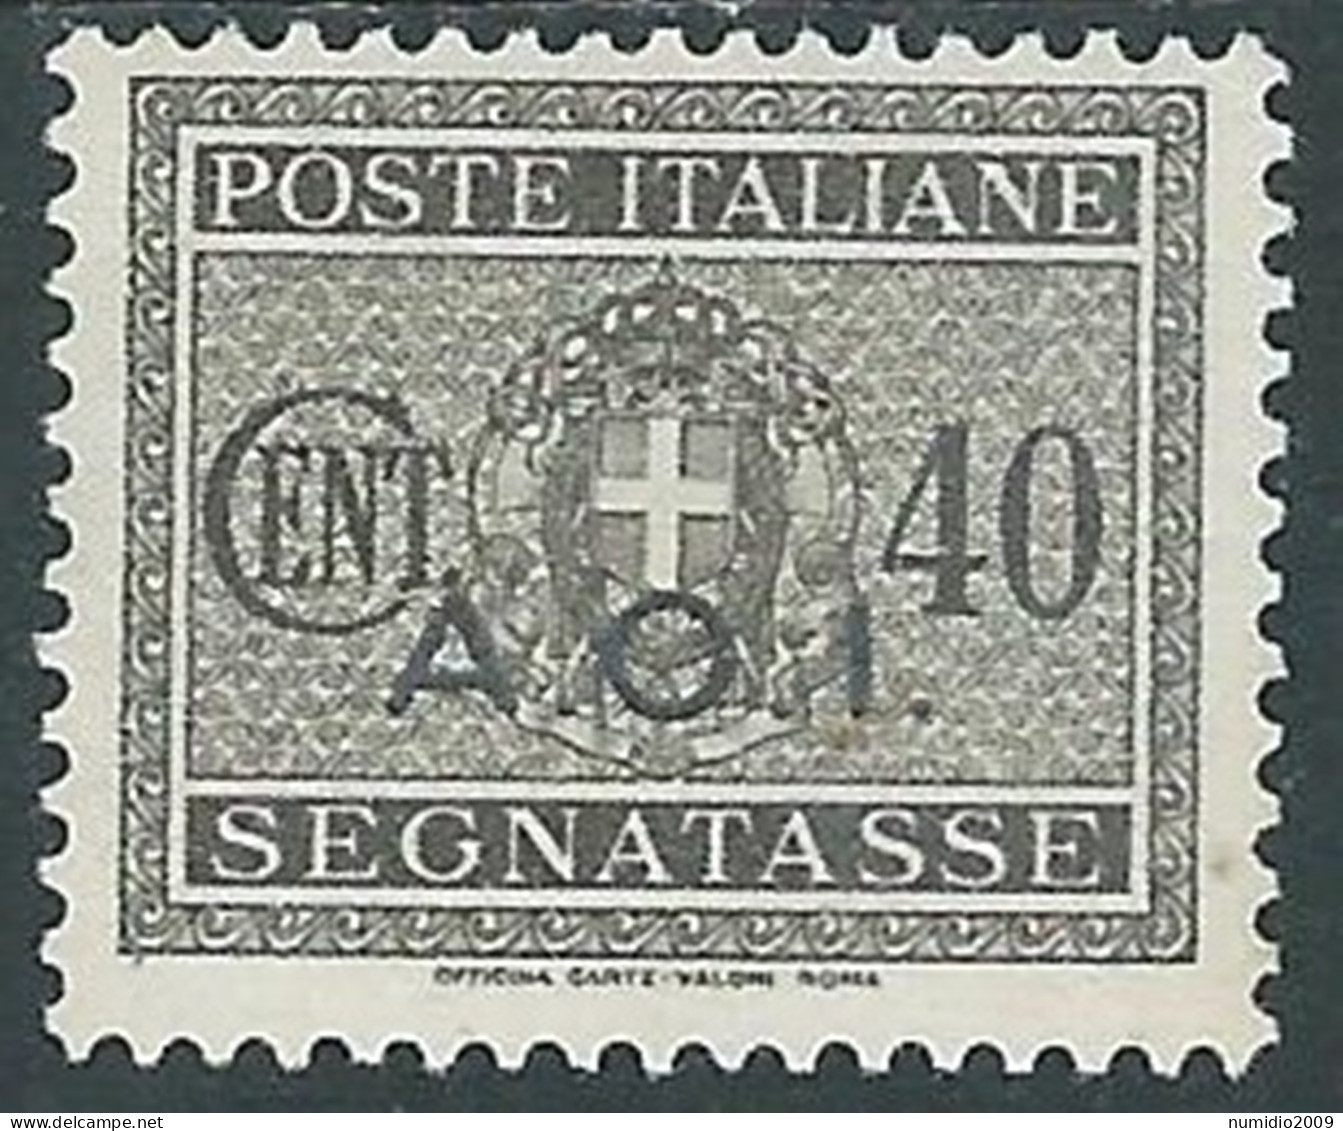 1939-40 AFRICA ORIENTALE ITALIANA SEGNATASSE 40 CENT MH * - I43-9 - Italian Eastern Africa